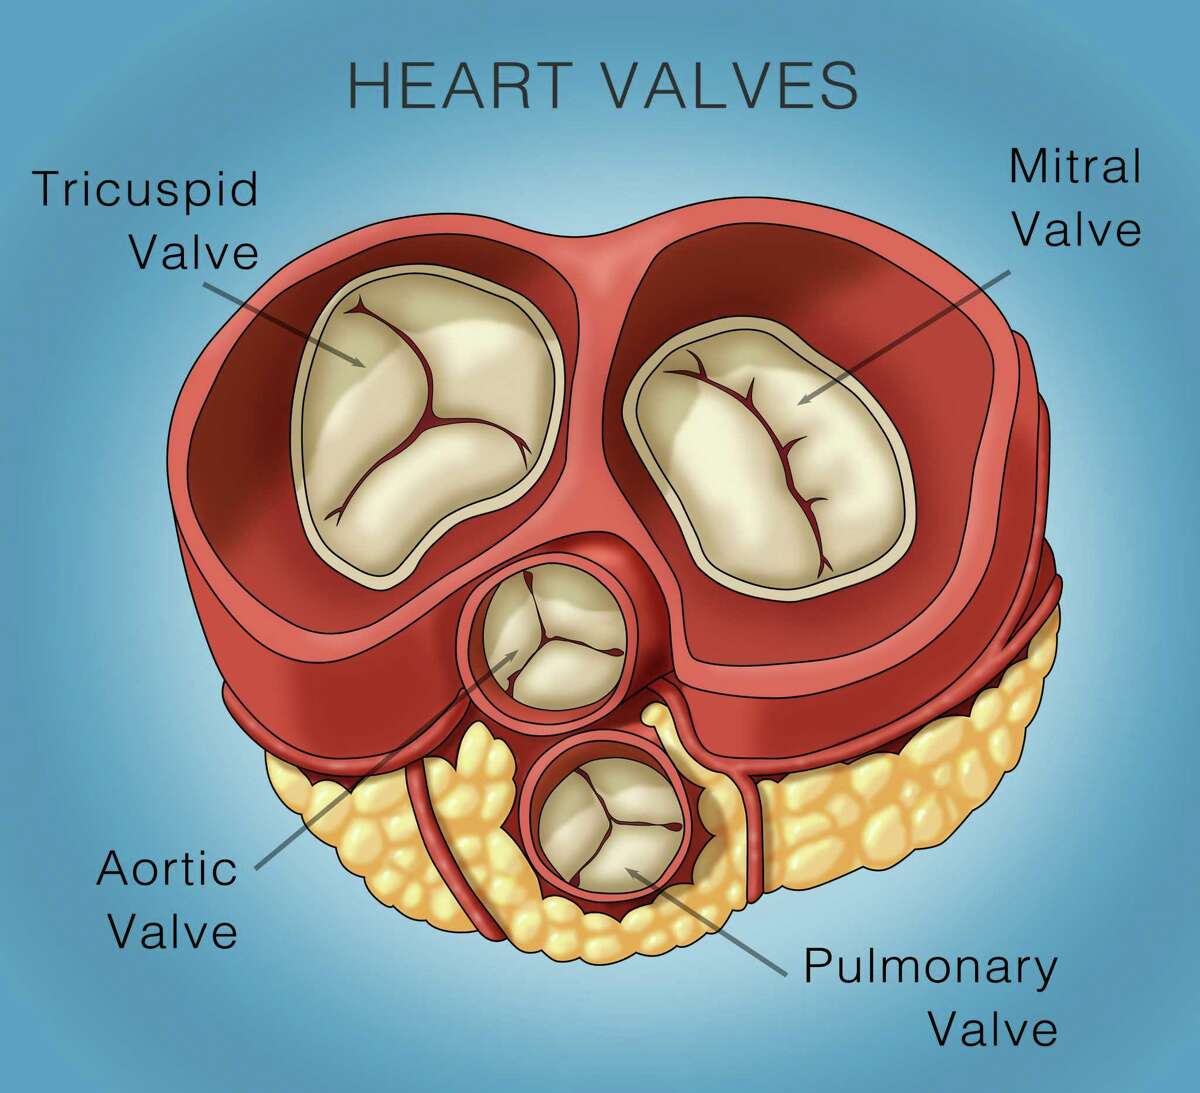 Mitral valve repair minimally invasive heart surgery vs